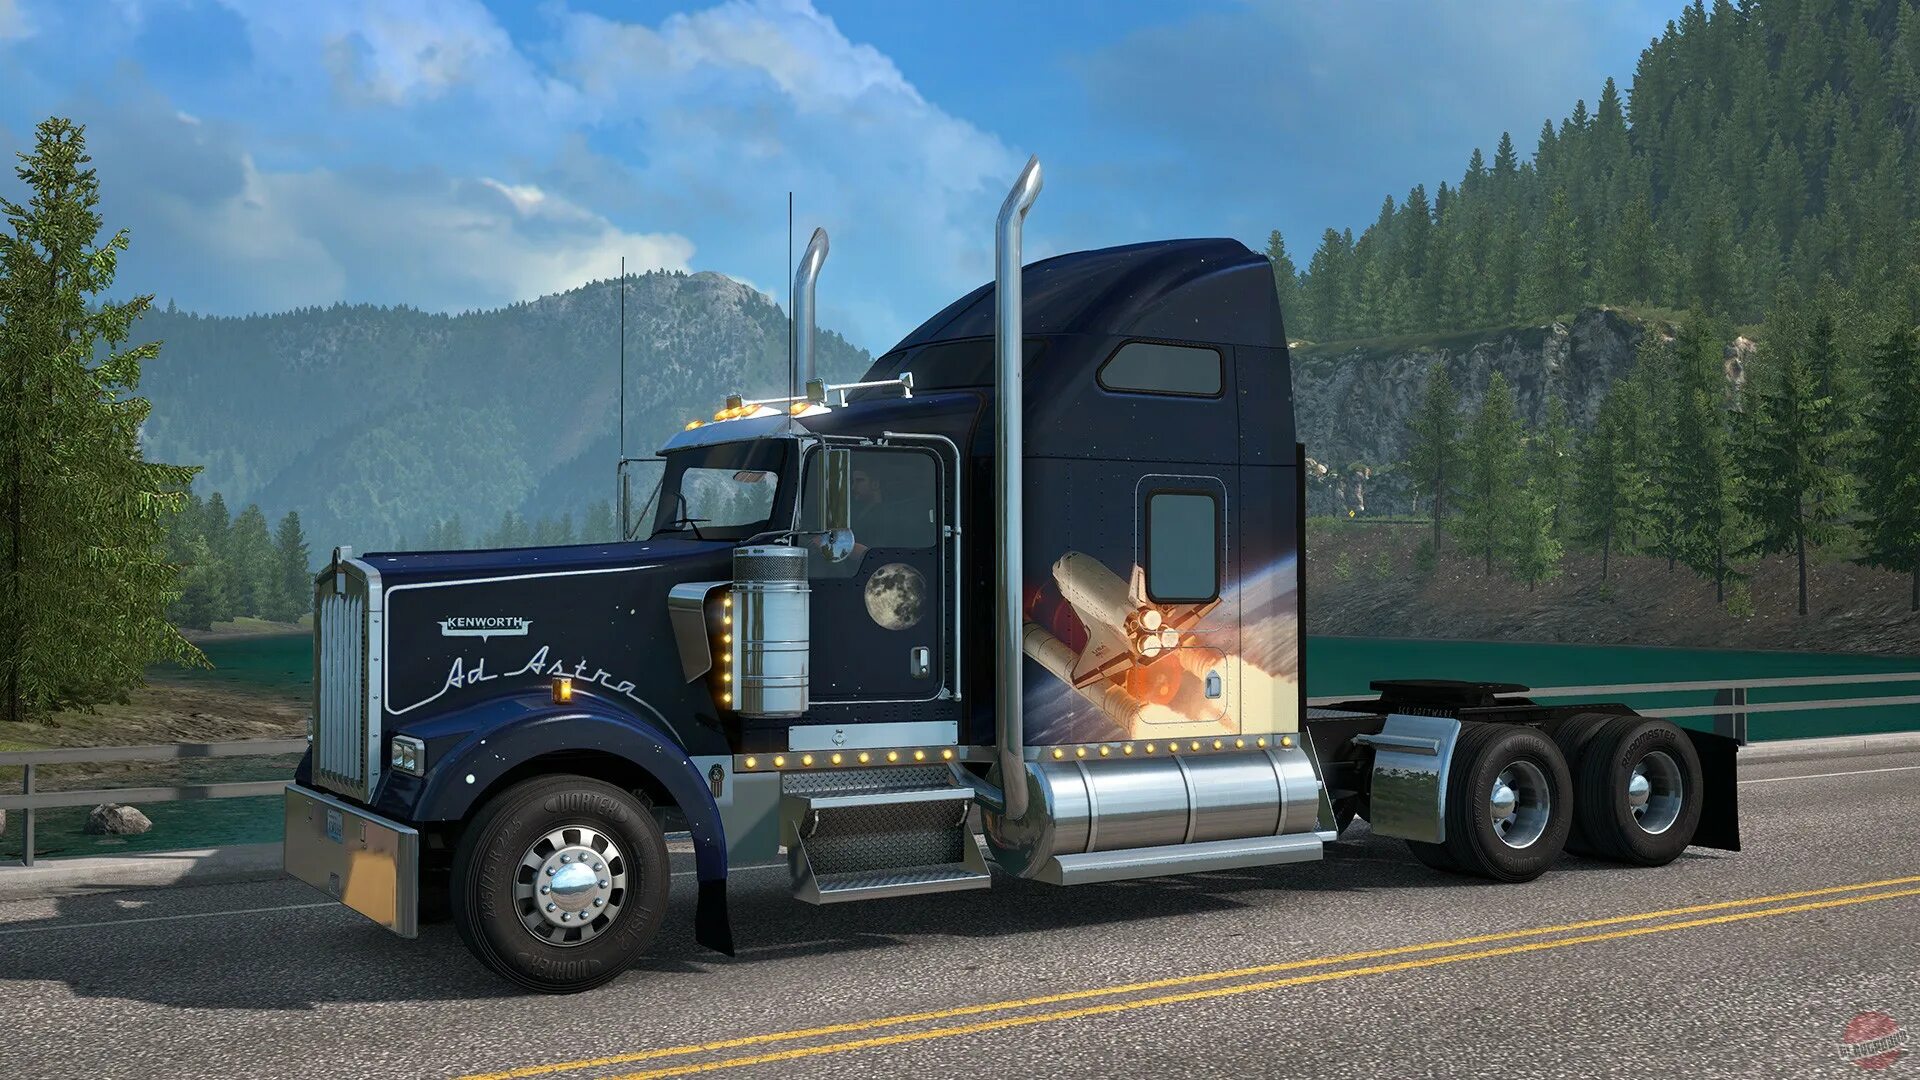 American truck simulator. ATS Грузовики. Мод Кенворт w900 Accessories Pack ATS. Американ трак симулятор обложка.